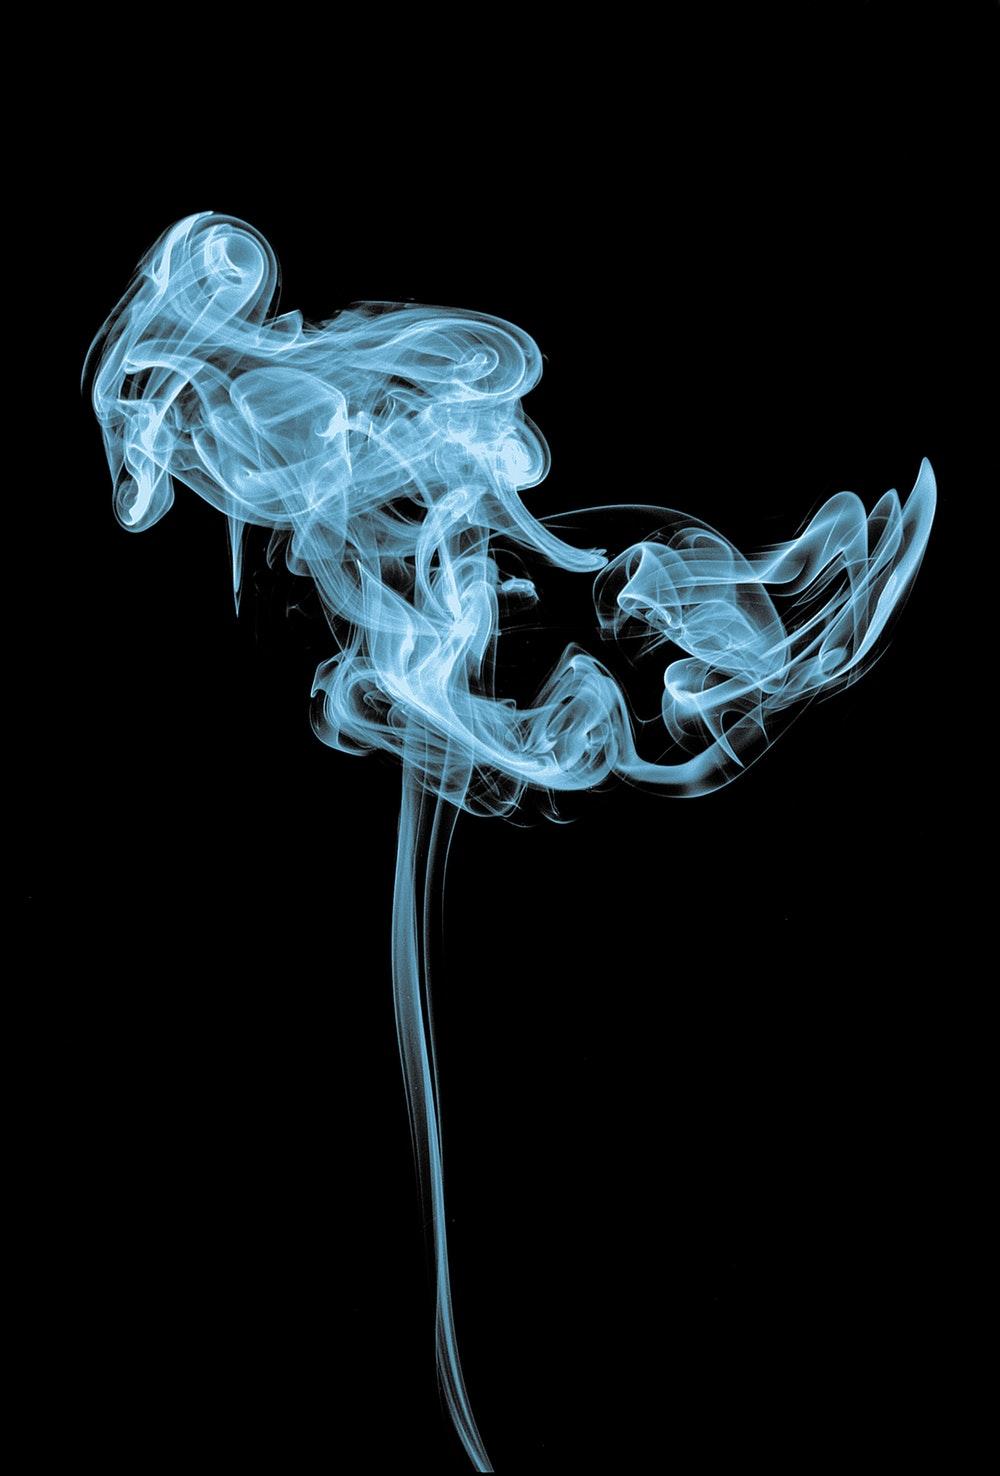 Smoking Weed Picture. Download Free Image